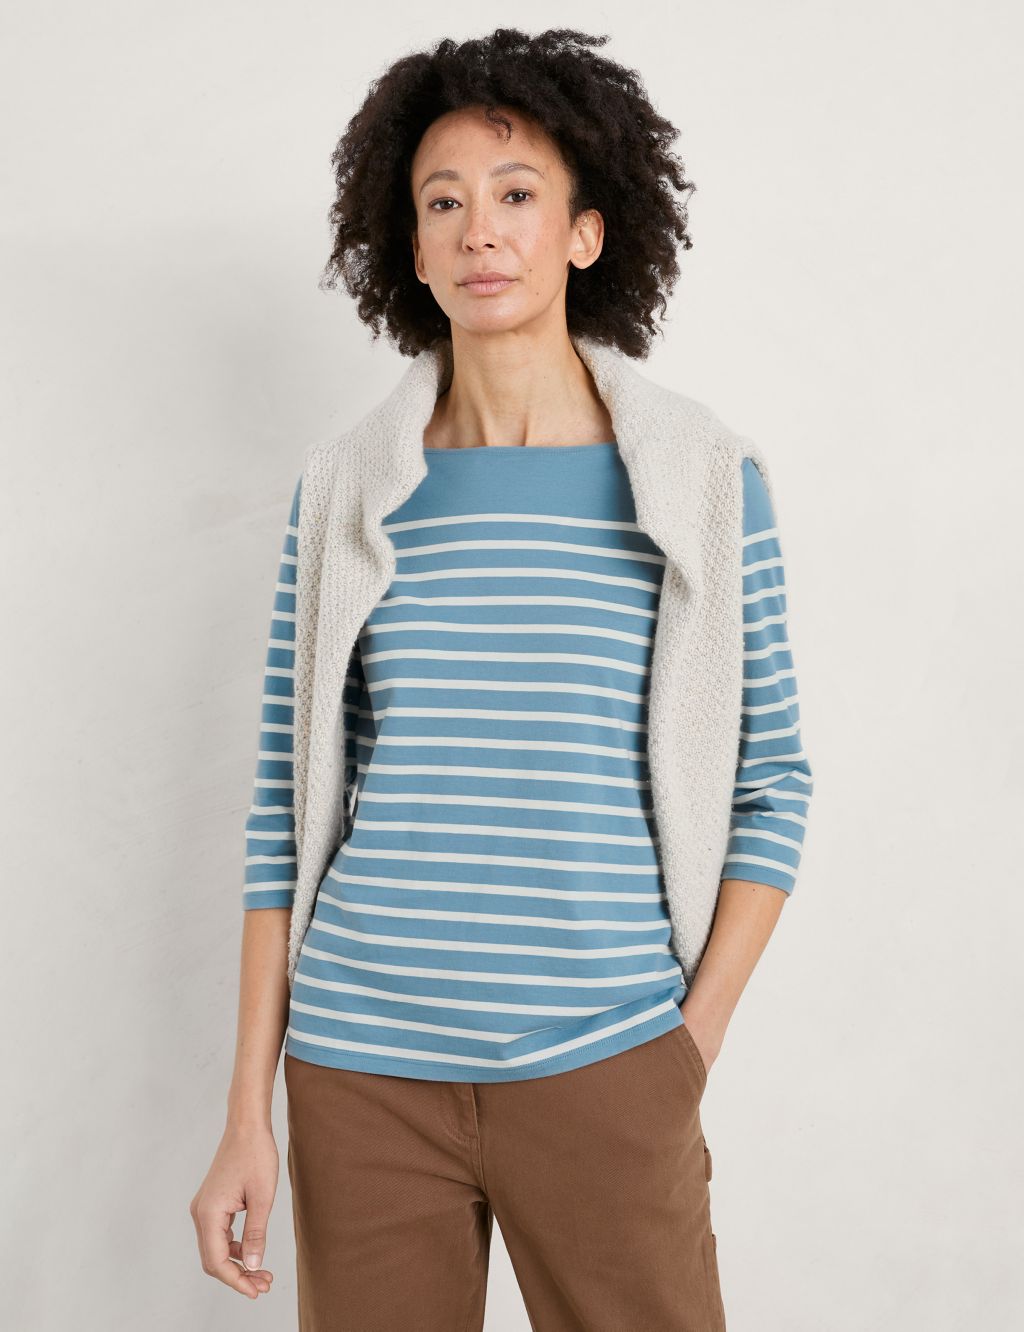 Organic Cotton Striped T-Shirt image 3